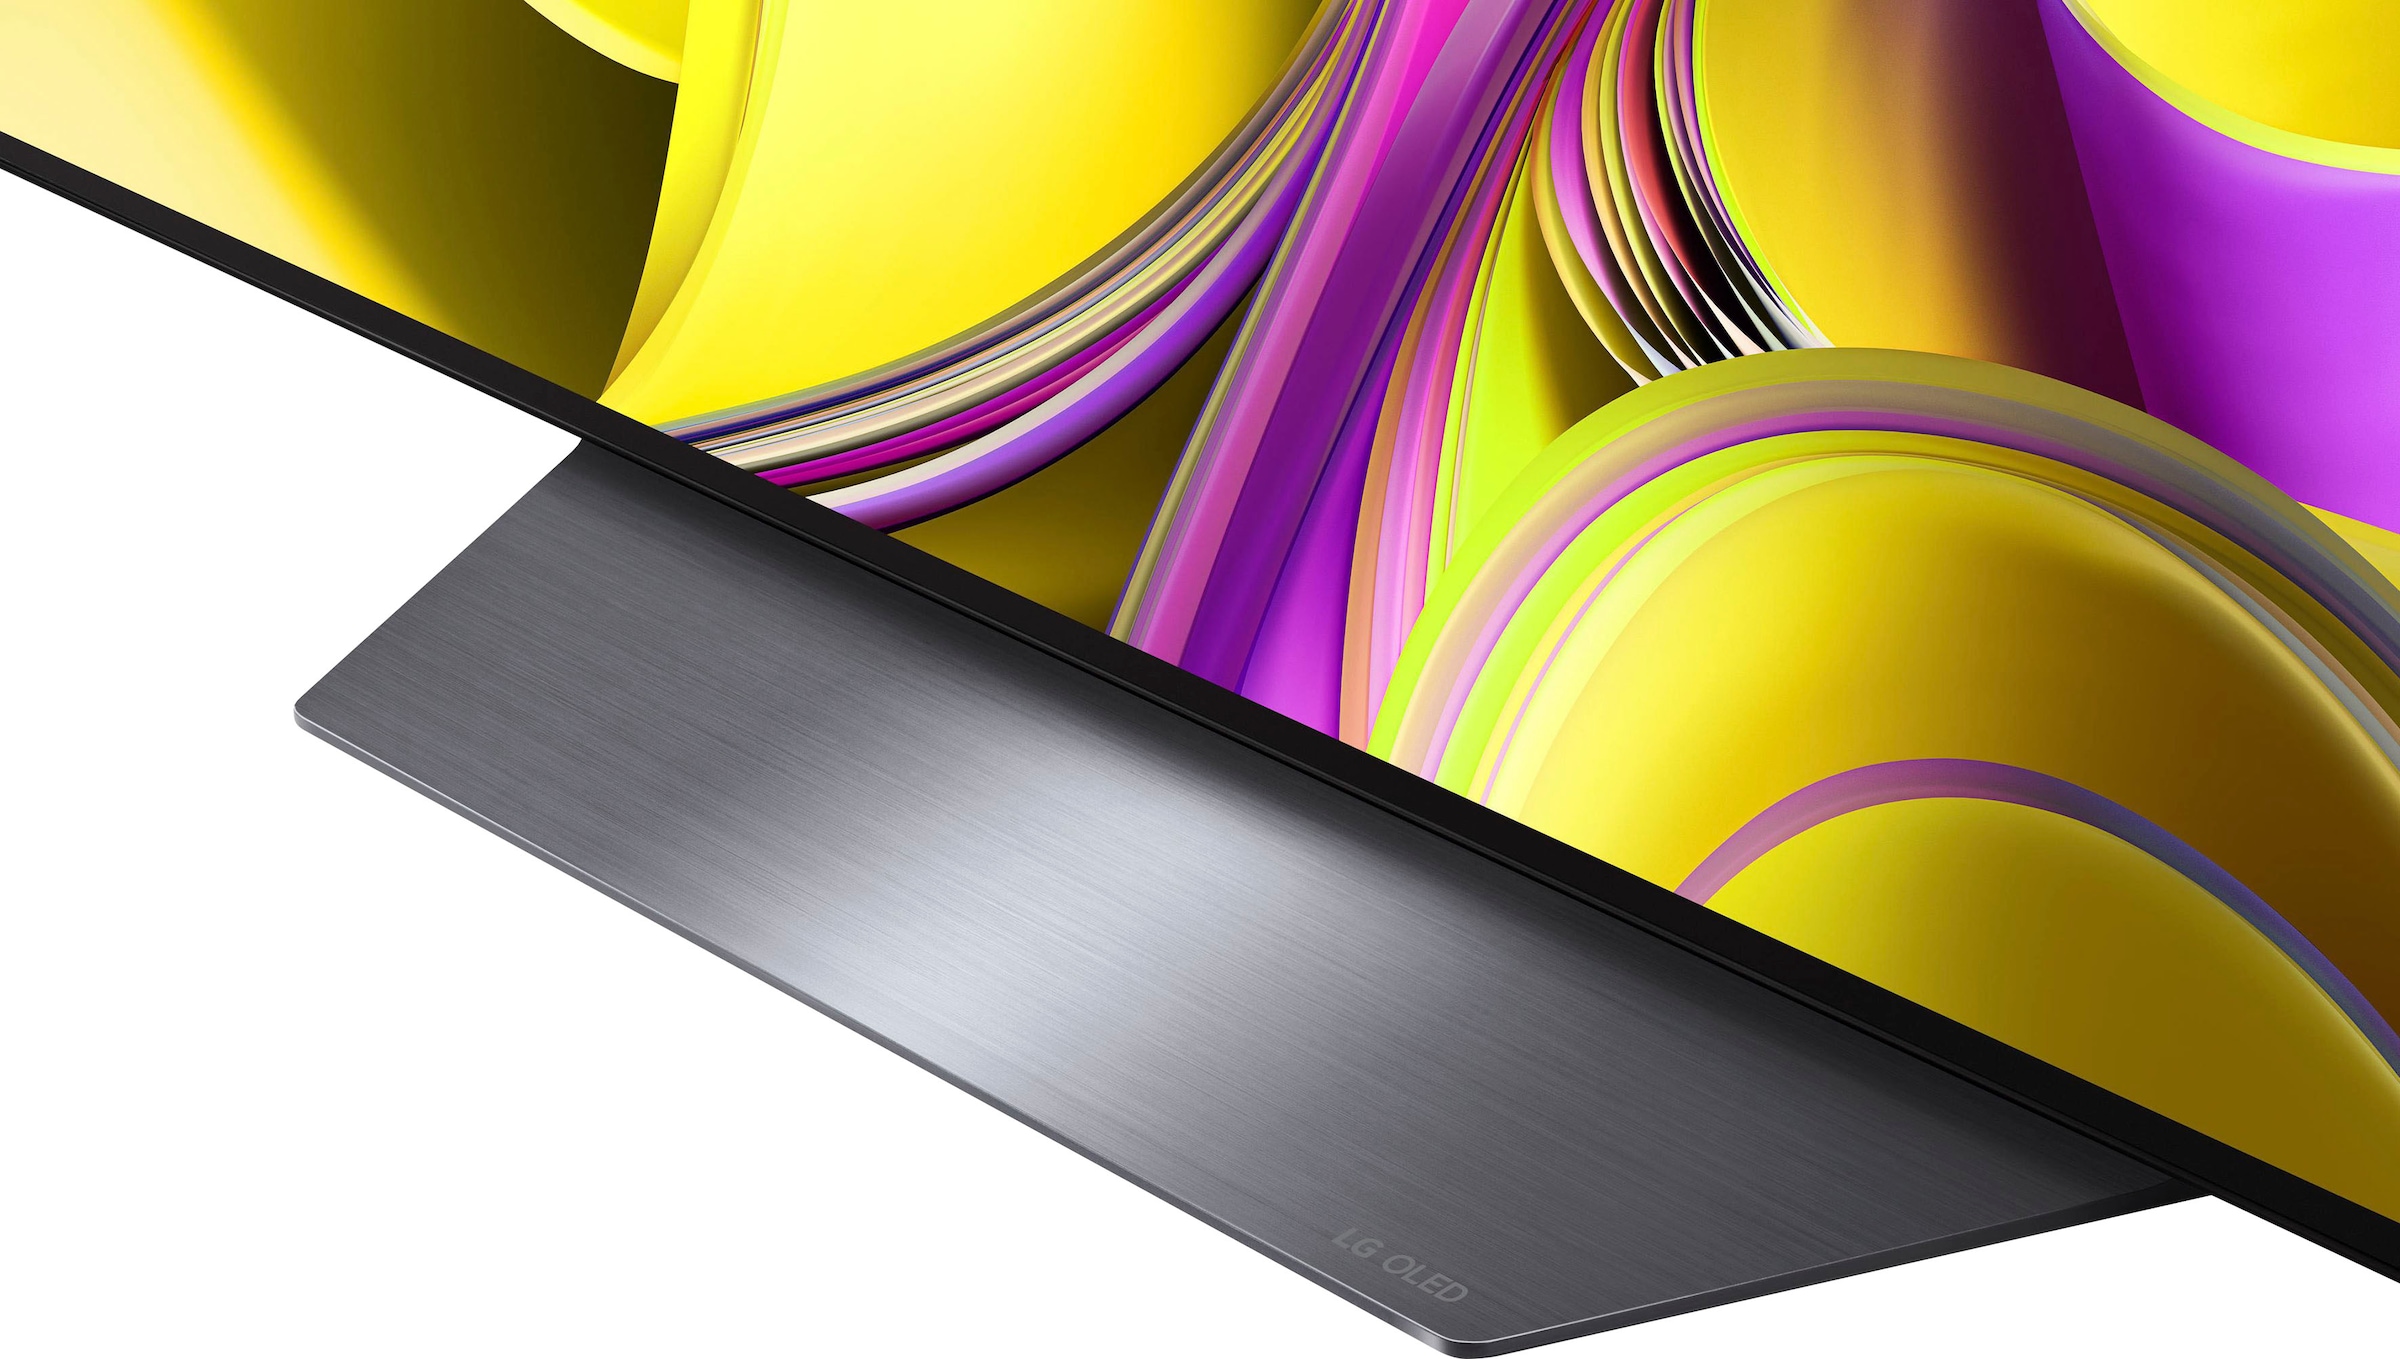 LG OLED-Fernseher, 165 cm/65 Zoll, 4K Ultra HD, Smart-TV